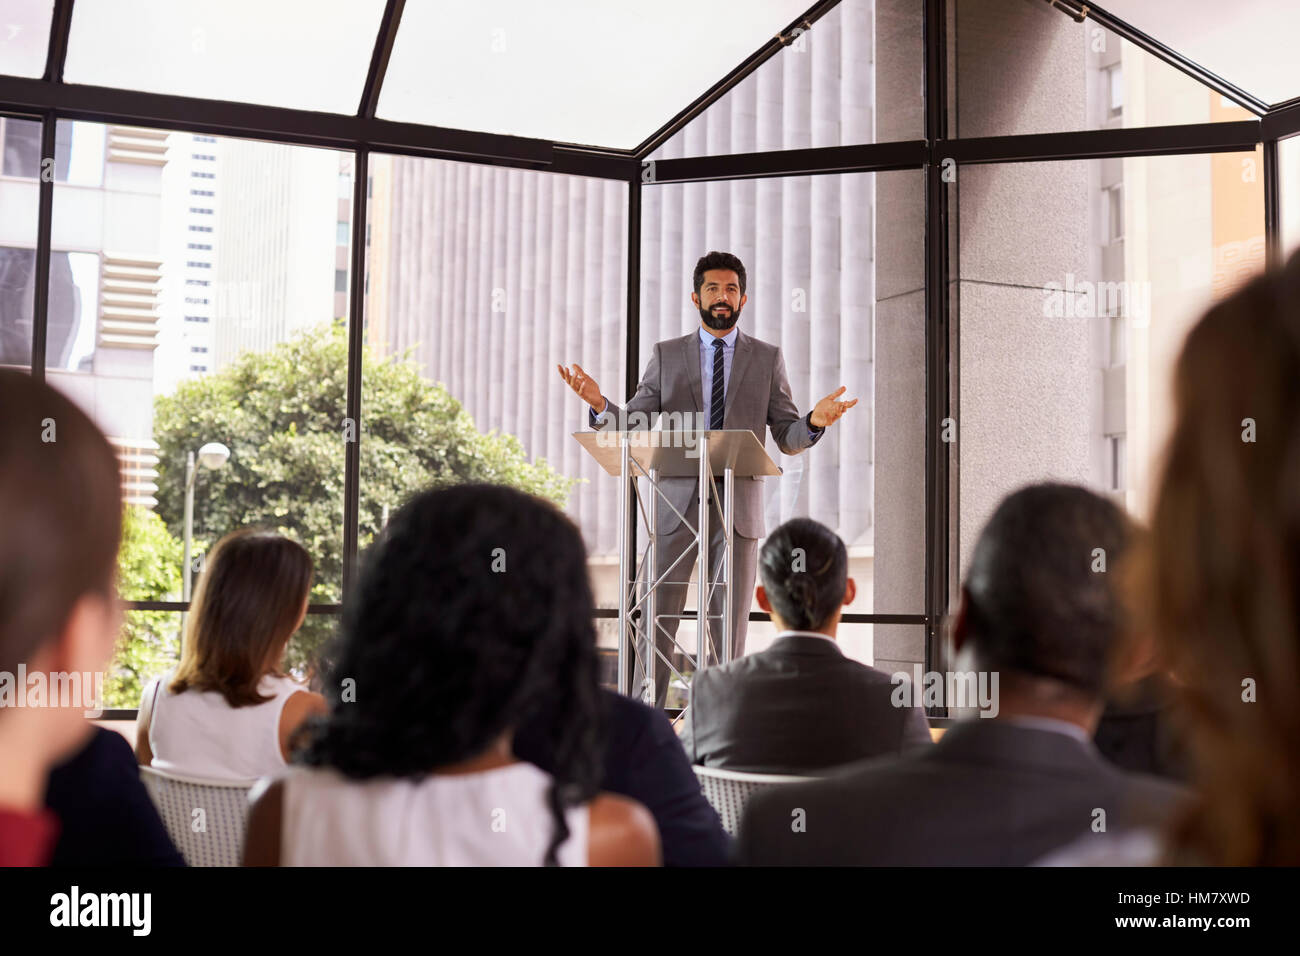 Hispanic man gesturing to audience at business seminar Stock Photo